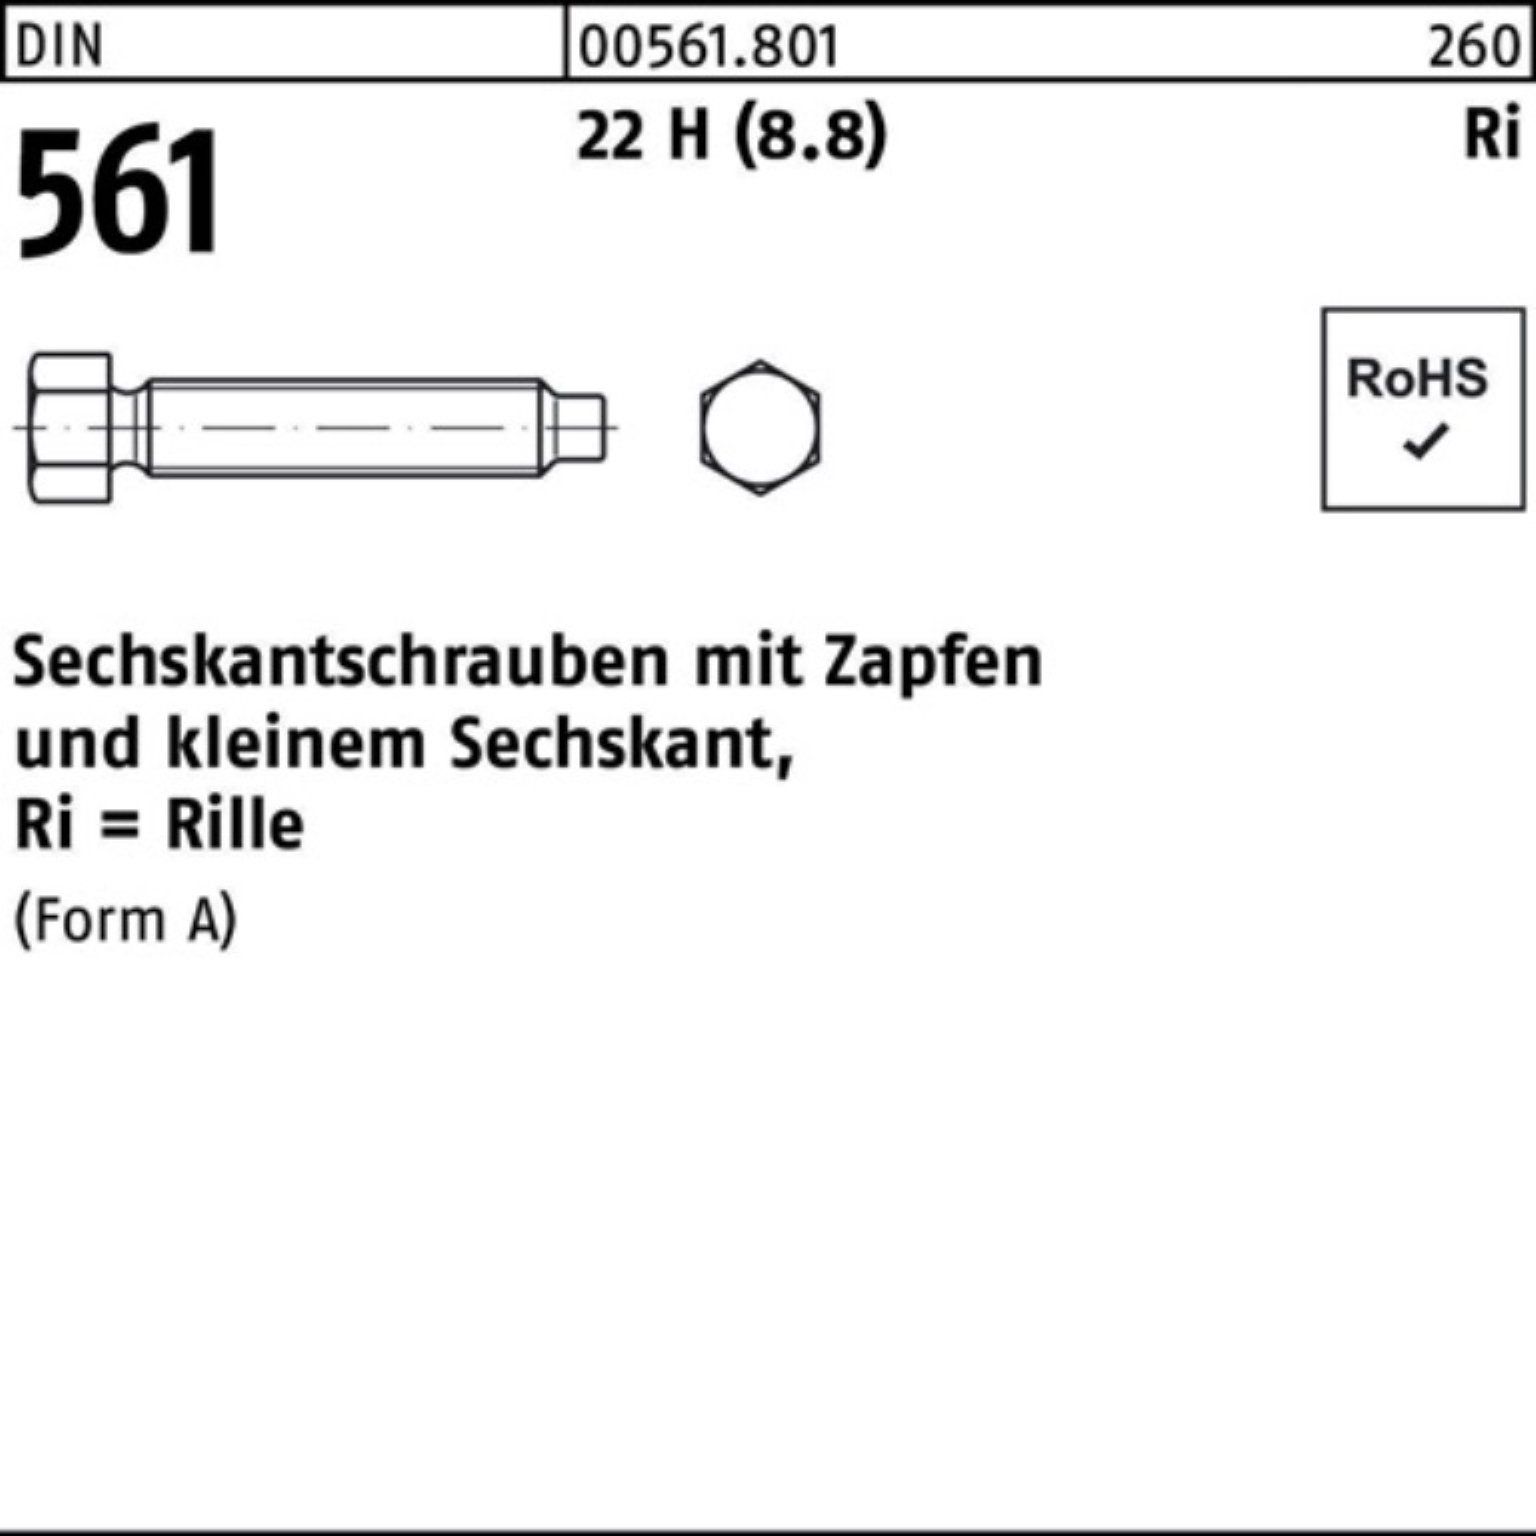 Reyher Sechskantschraube 100er Pack Sechskantschraube DIN 561 Zapfen AM 16x 45 22 H (8.8) 25 St